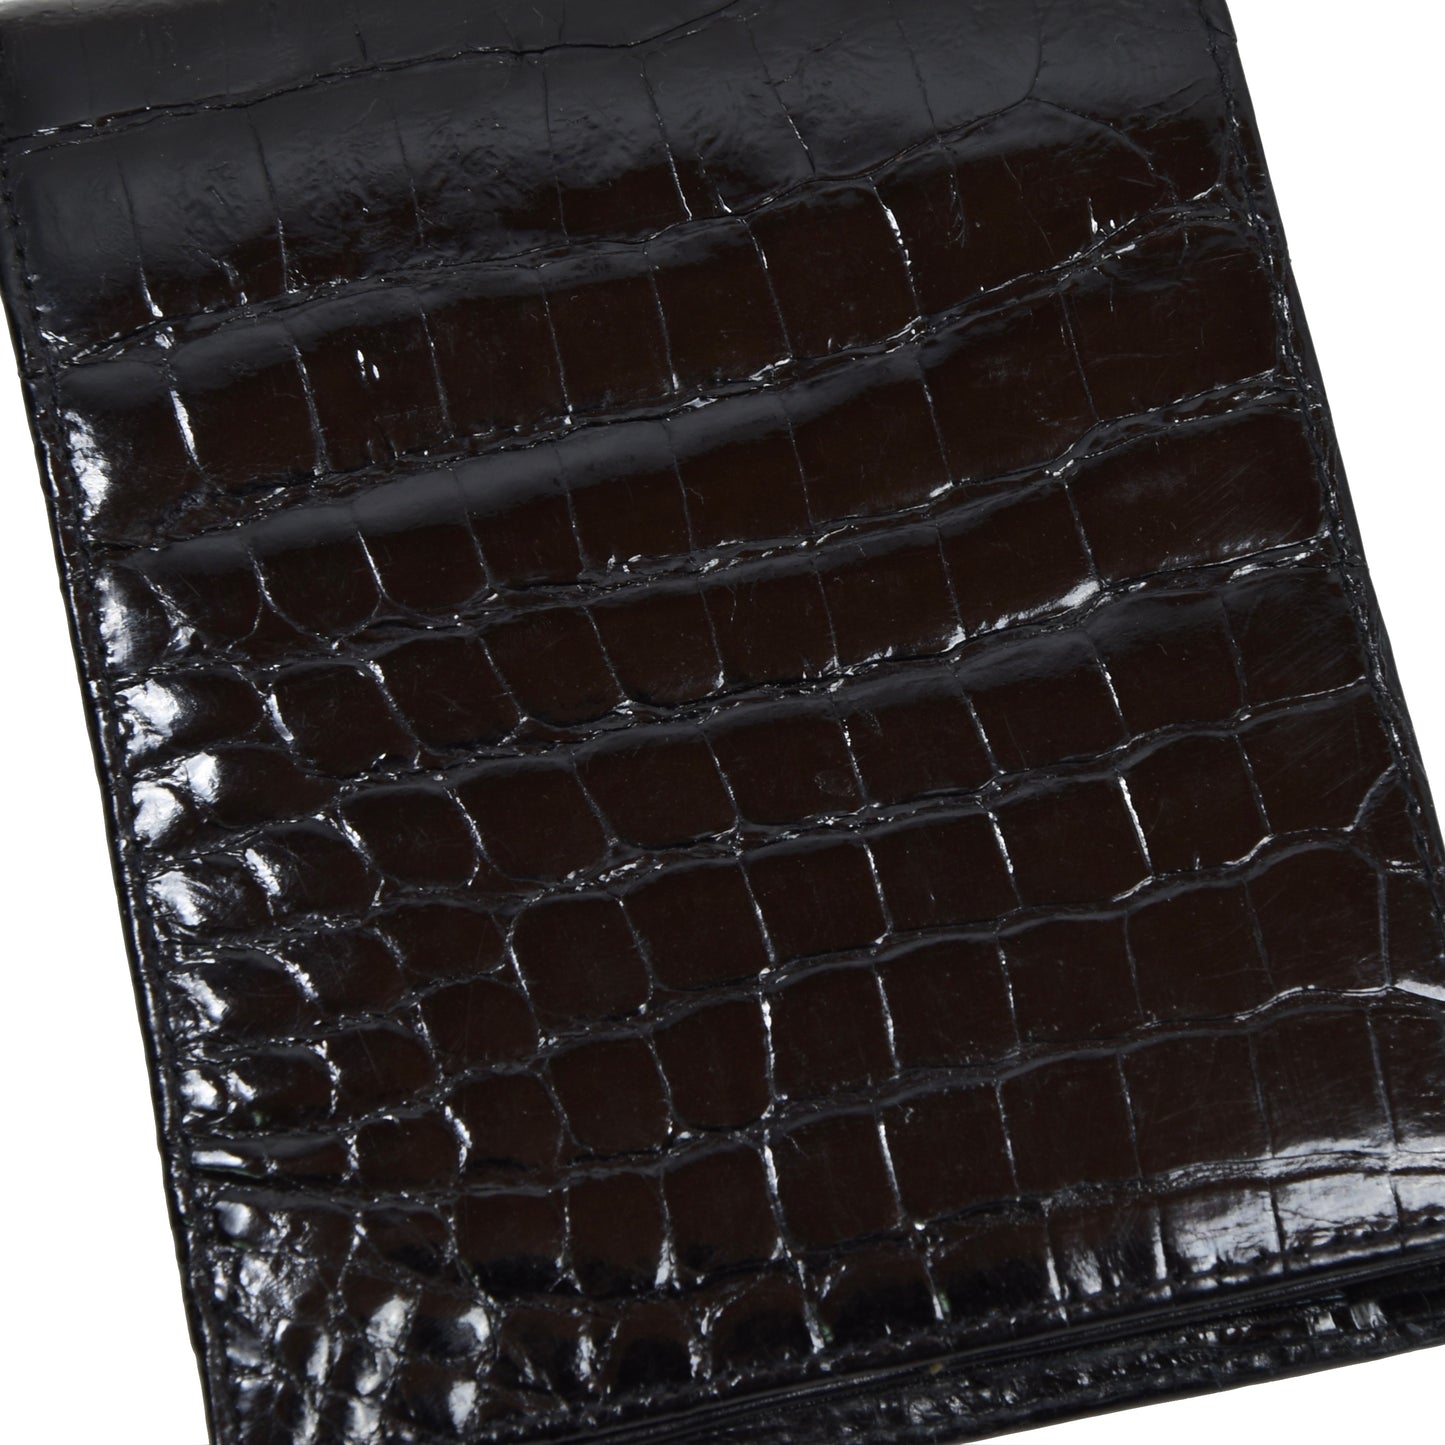 Genuine Crocodile Leather Wallet - Black